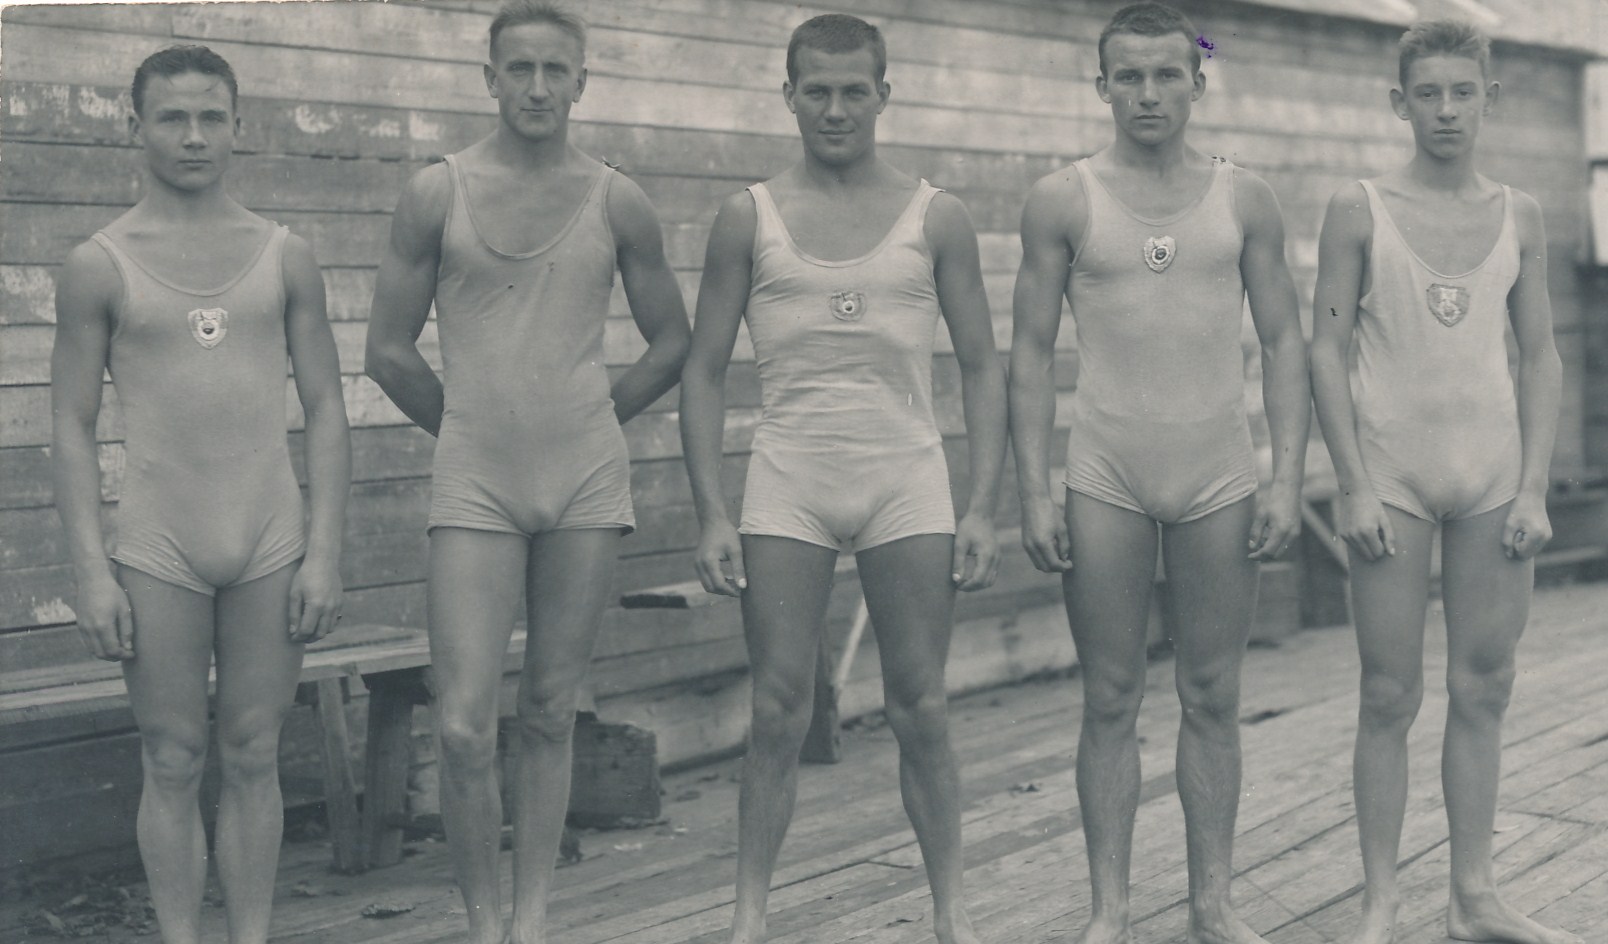 Group of athletes in the Tartu Uye